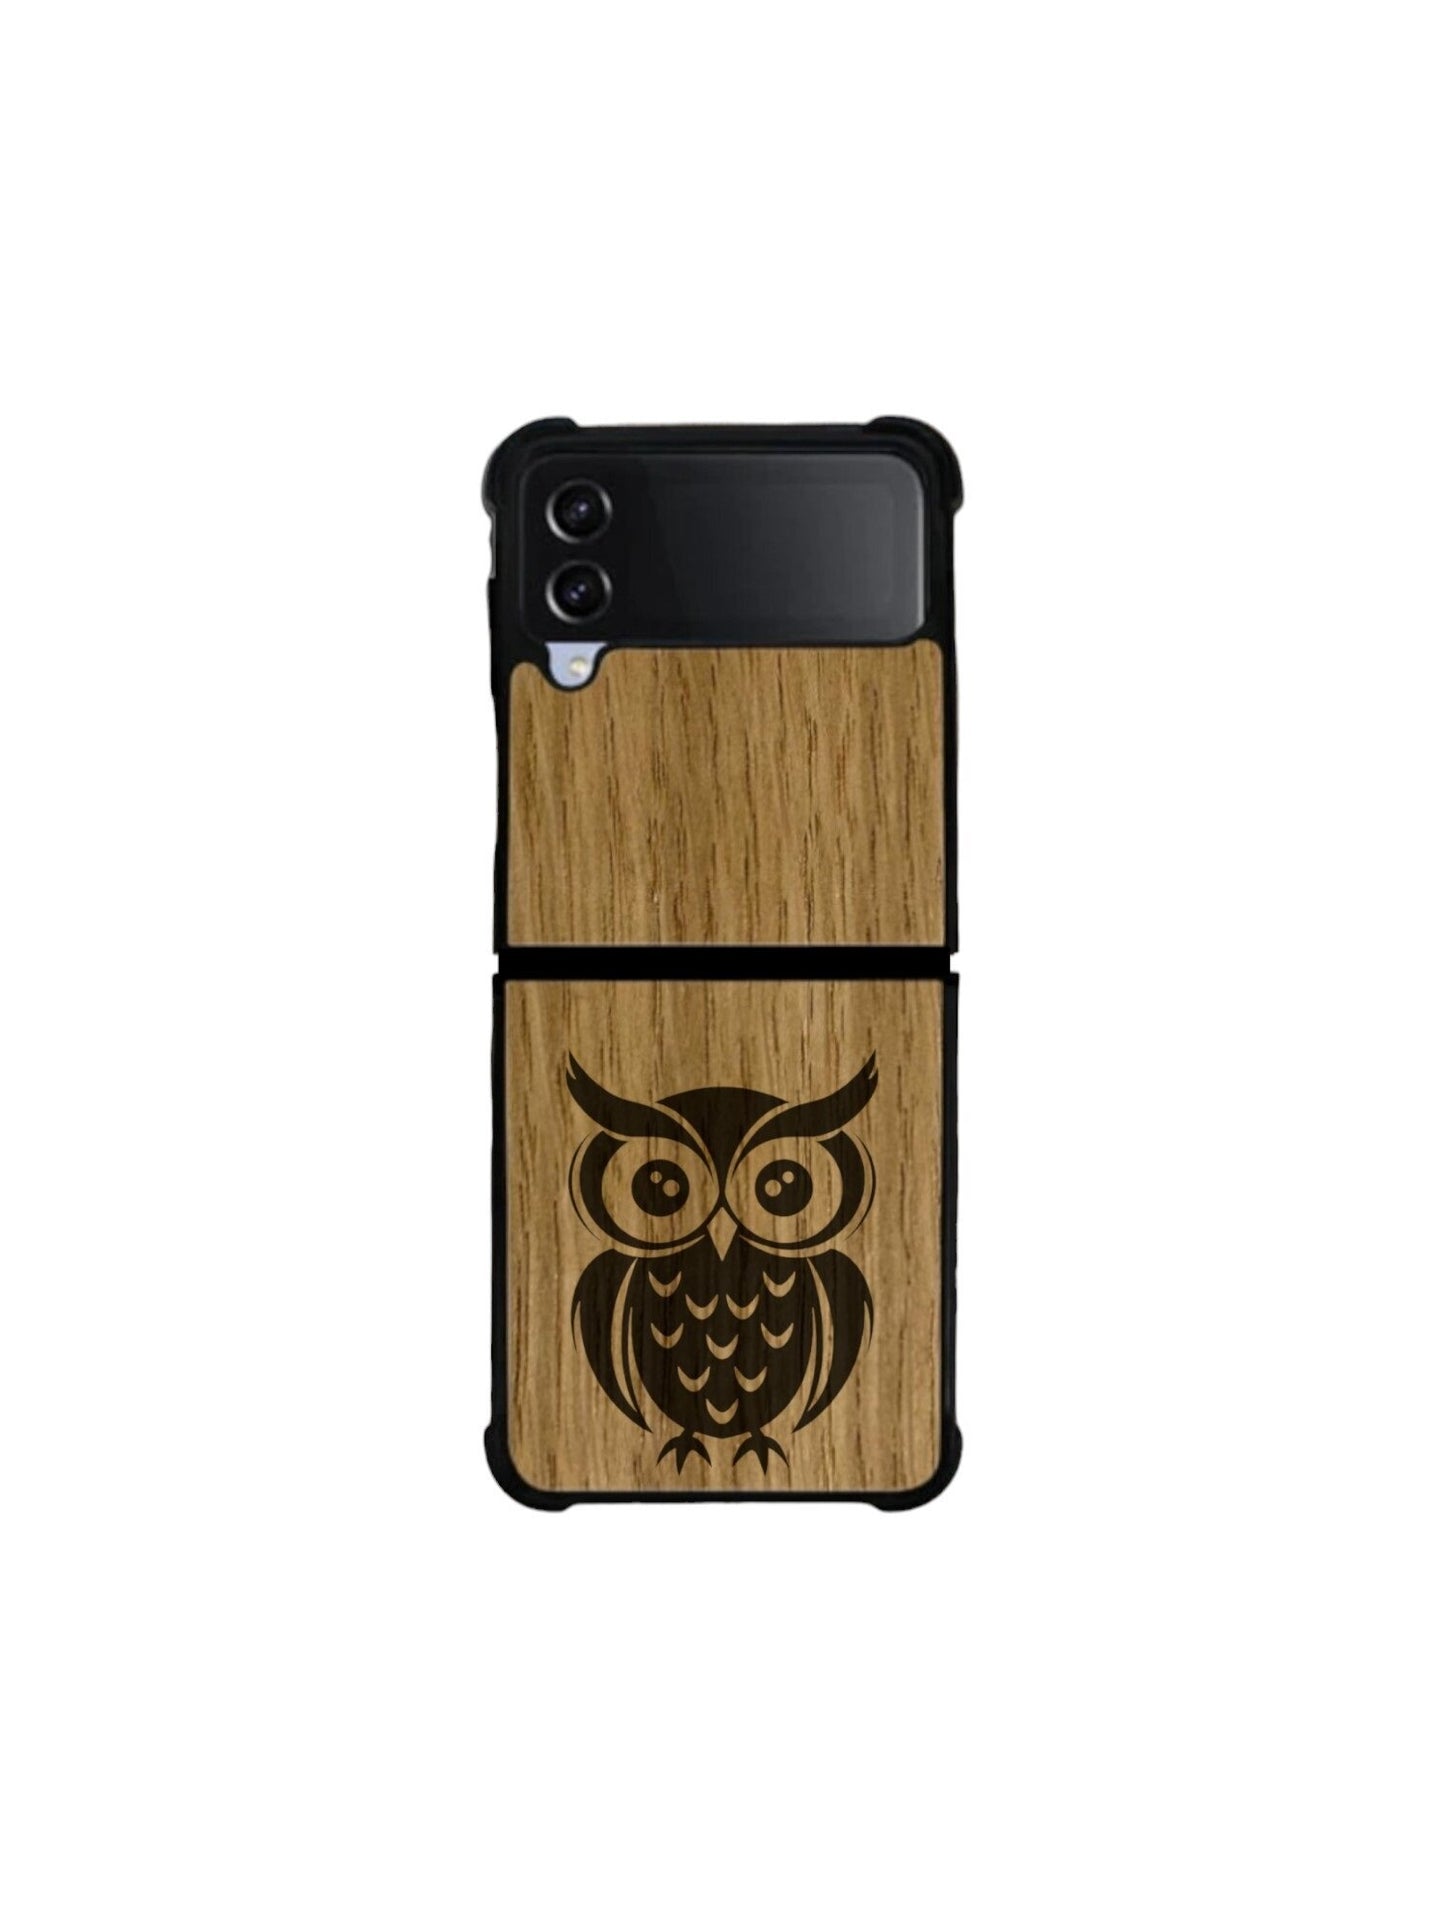 Samsung Galaxy Z Flip Case - Owl